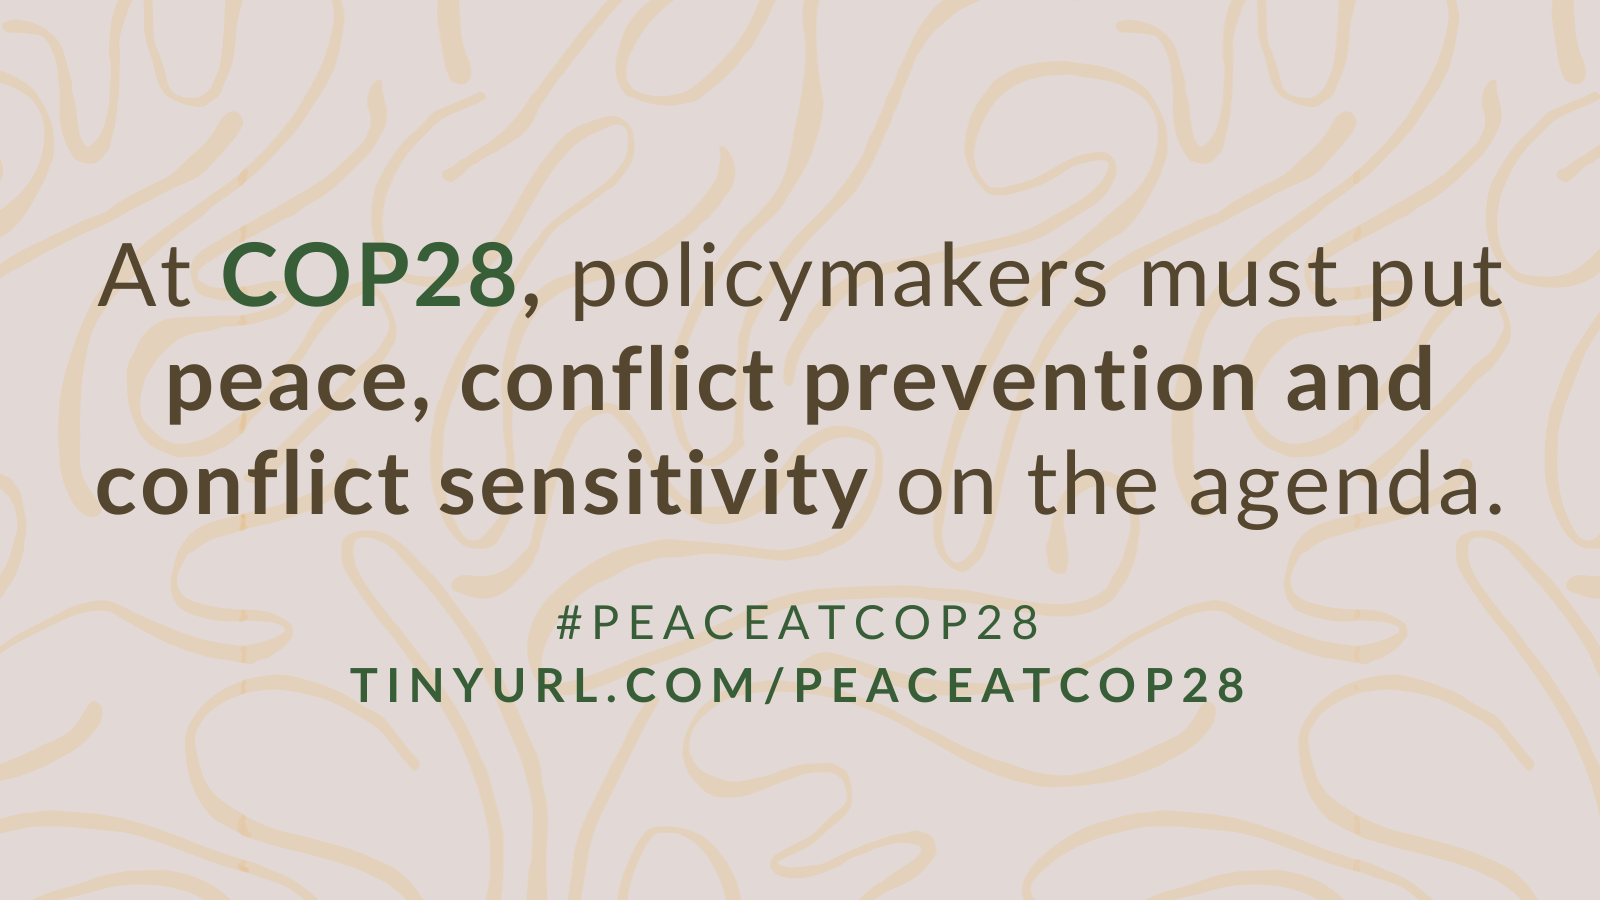 The Geneva Peacebuilding Platform’s participation in COP28